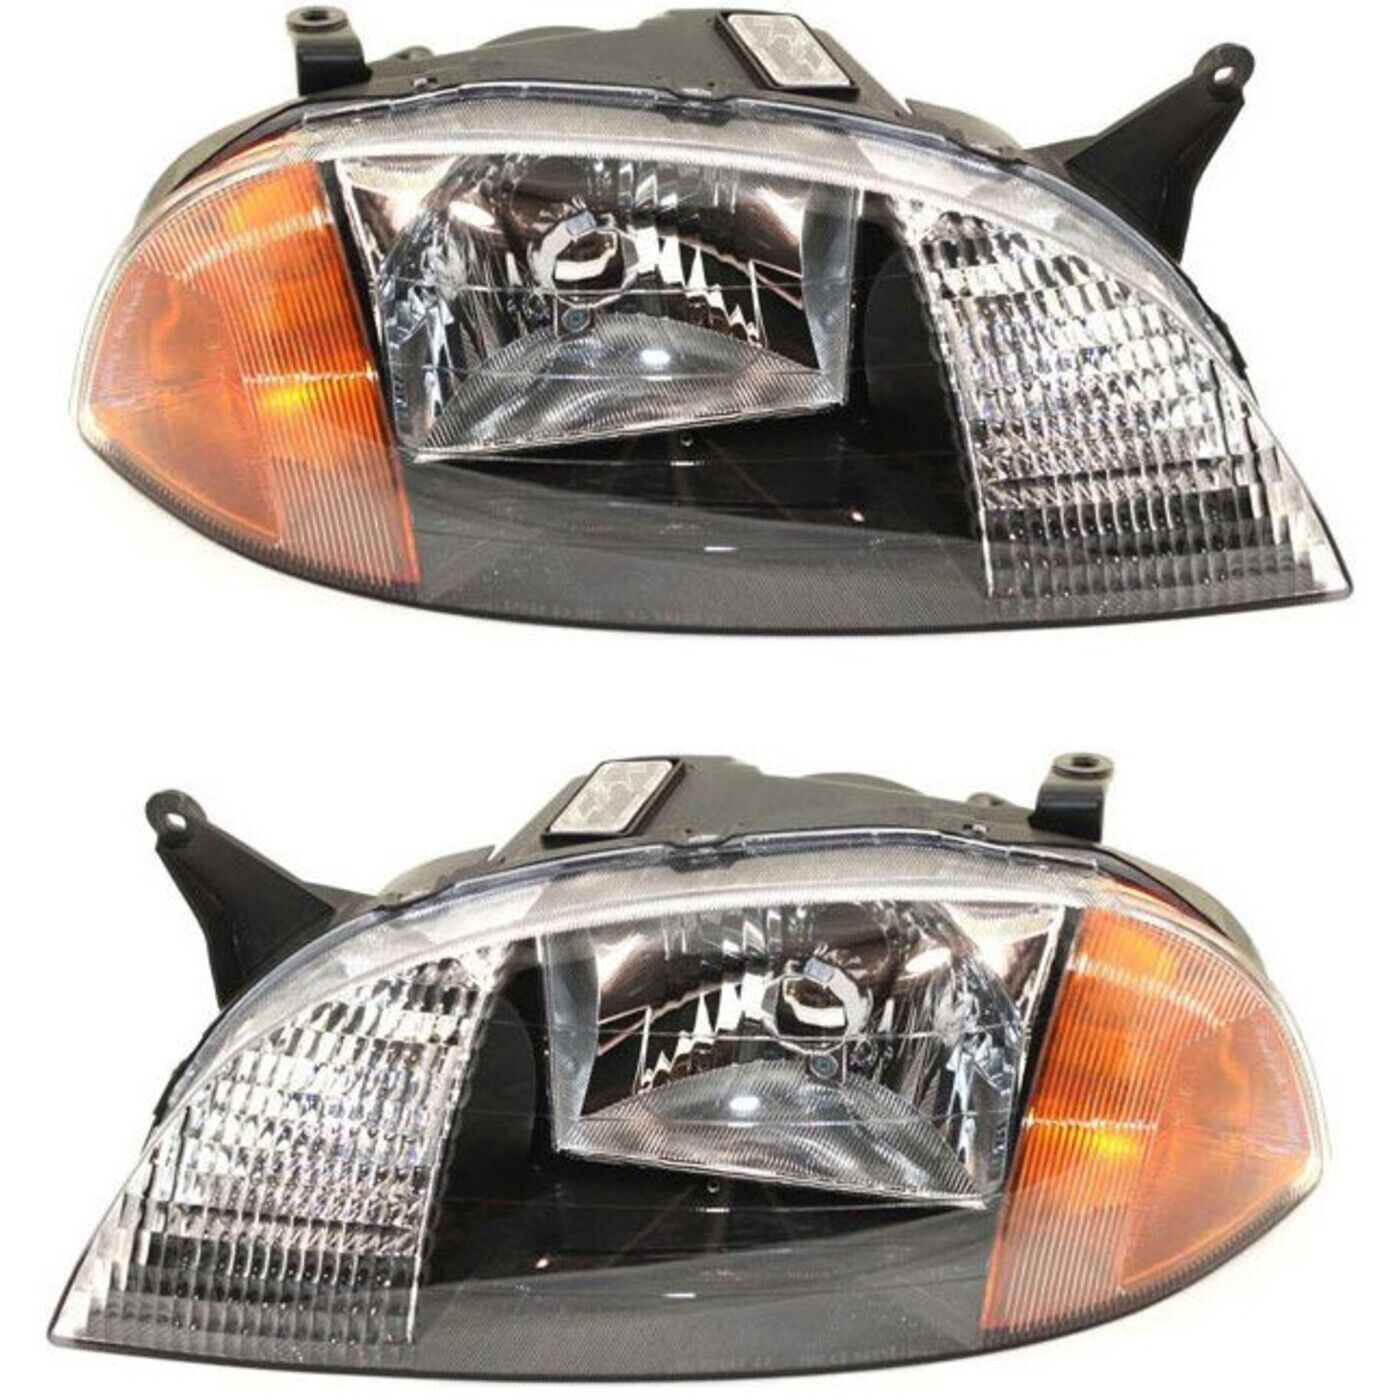 Headlight Set For 98-2001 Chevrolet Metro Suzuki Swift Left & Right Side